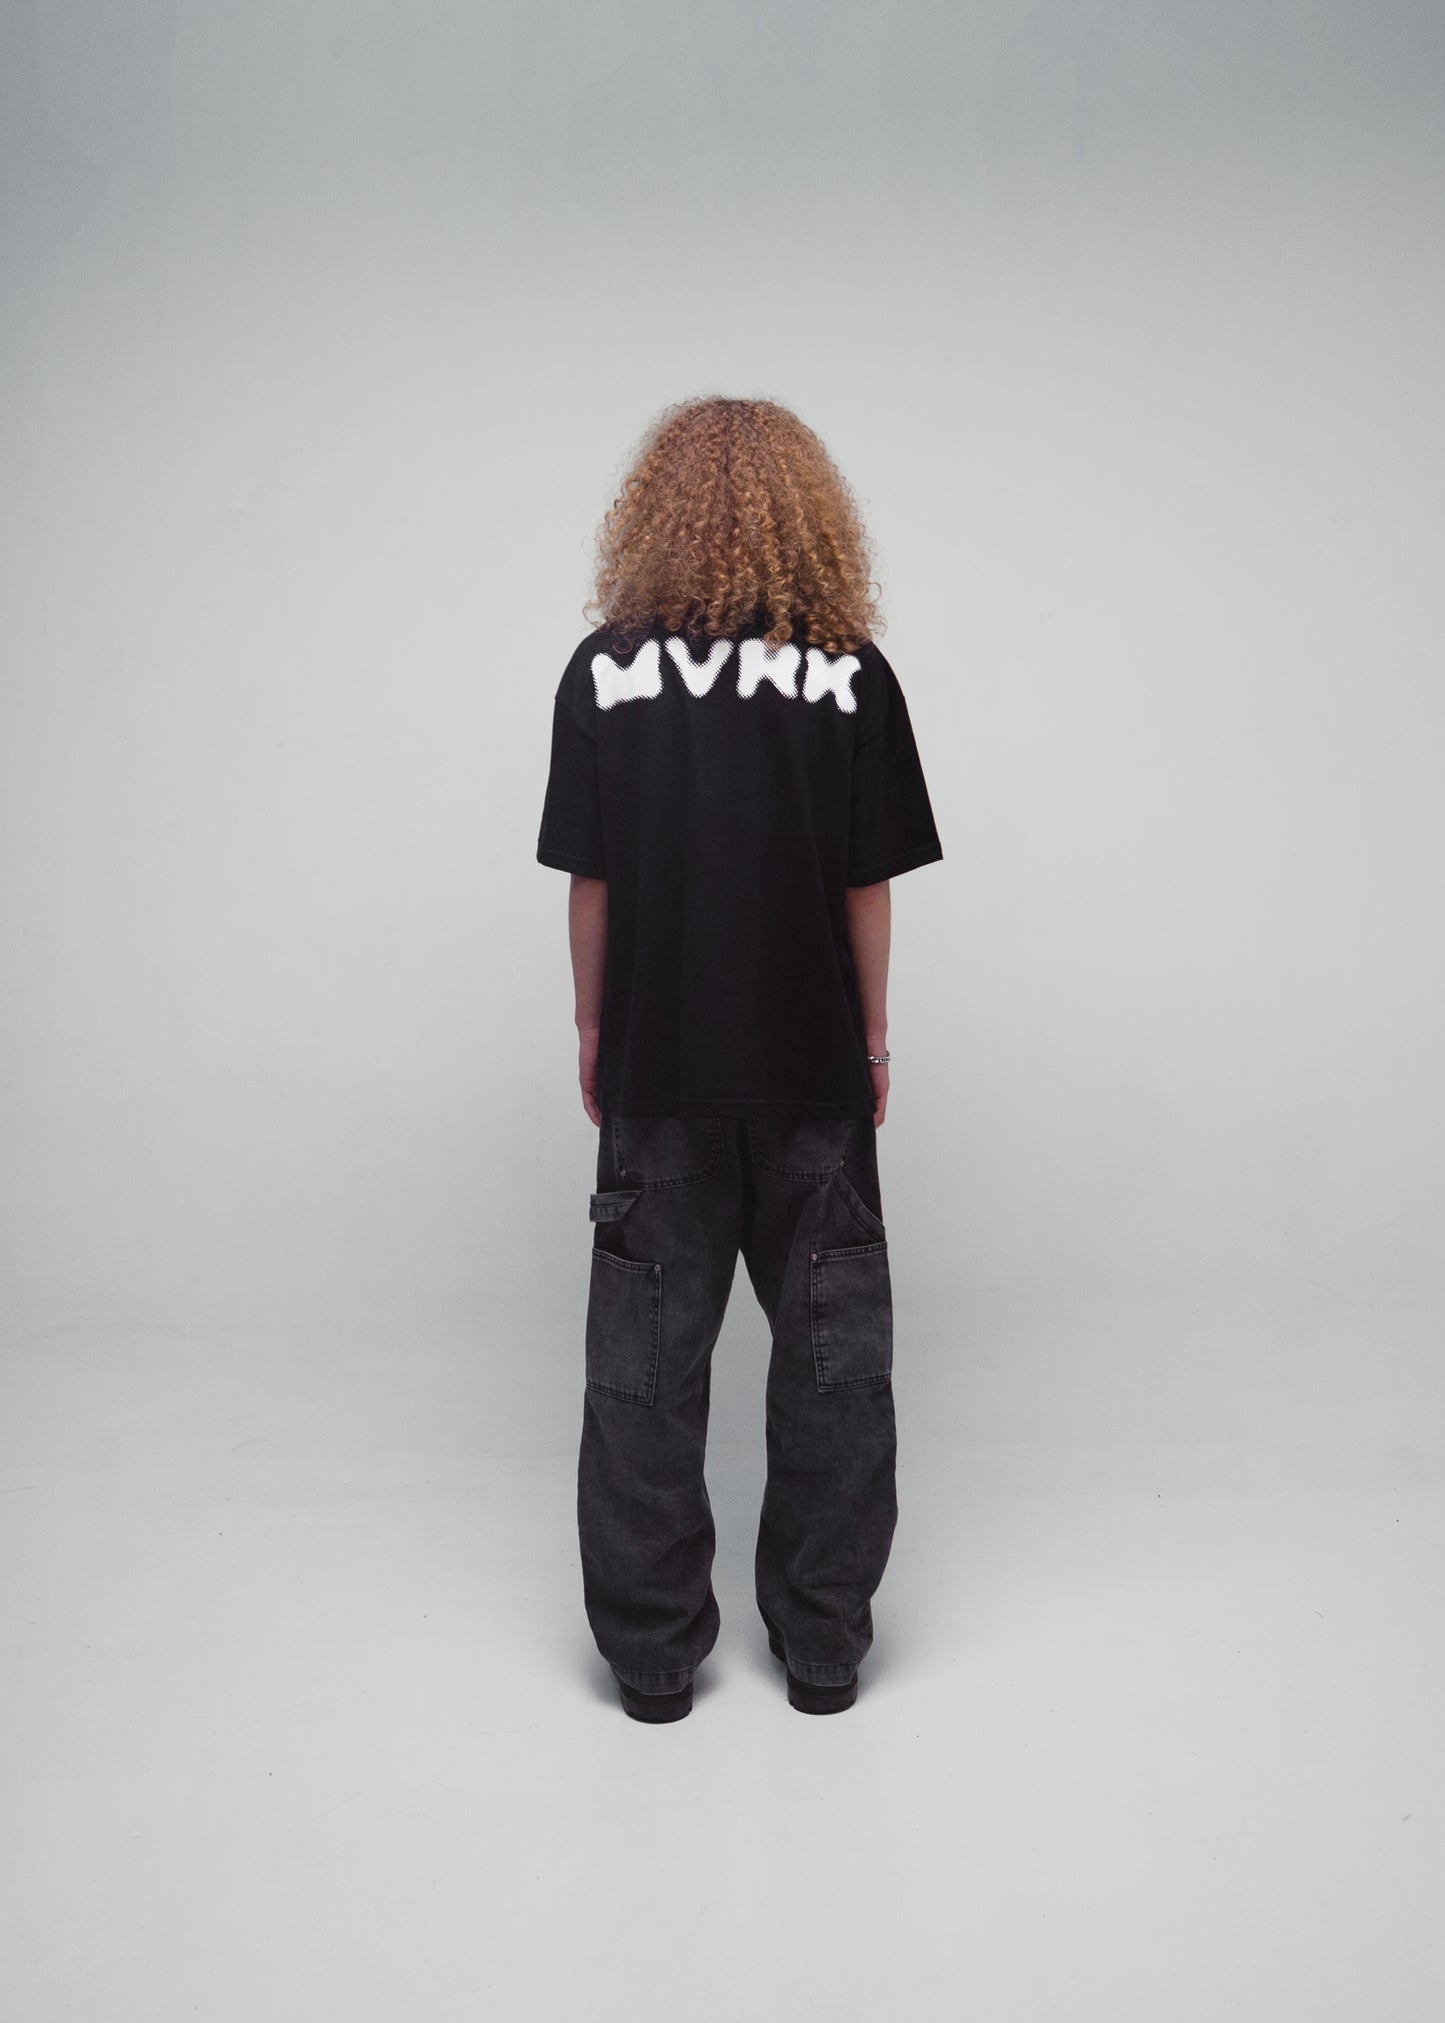 Camiseta Soul Preta MVRK